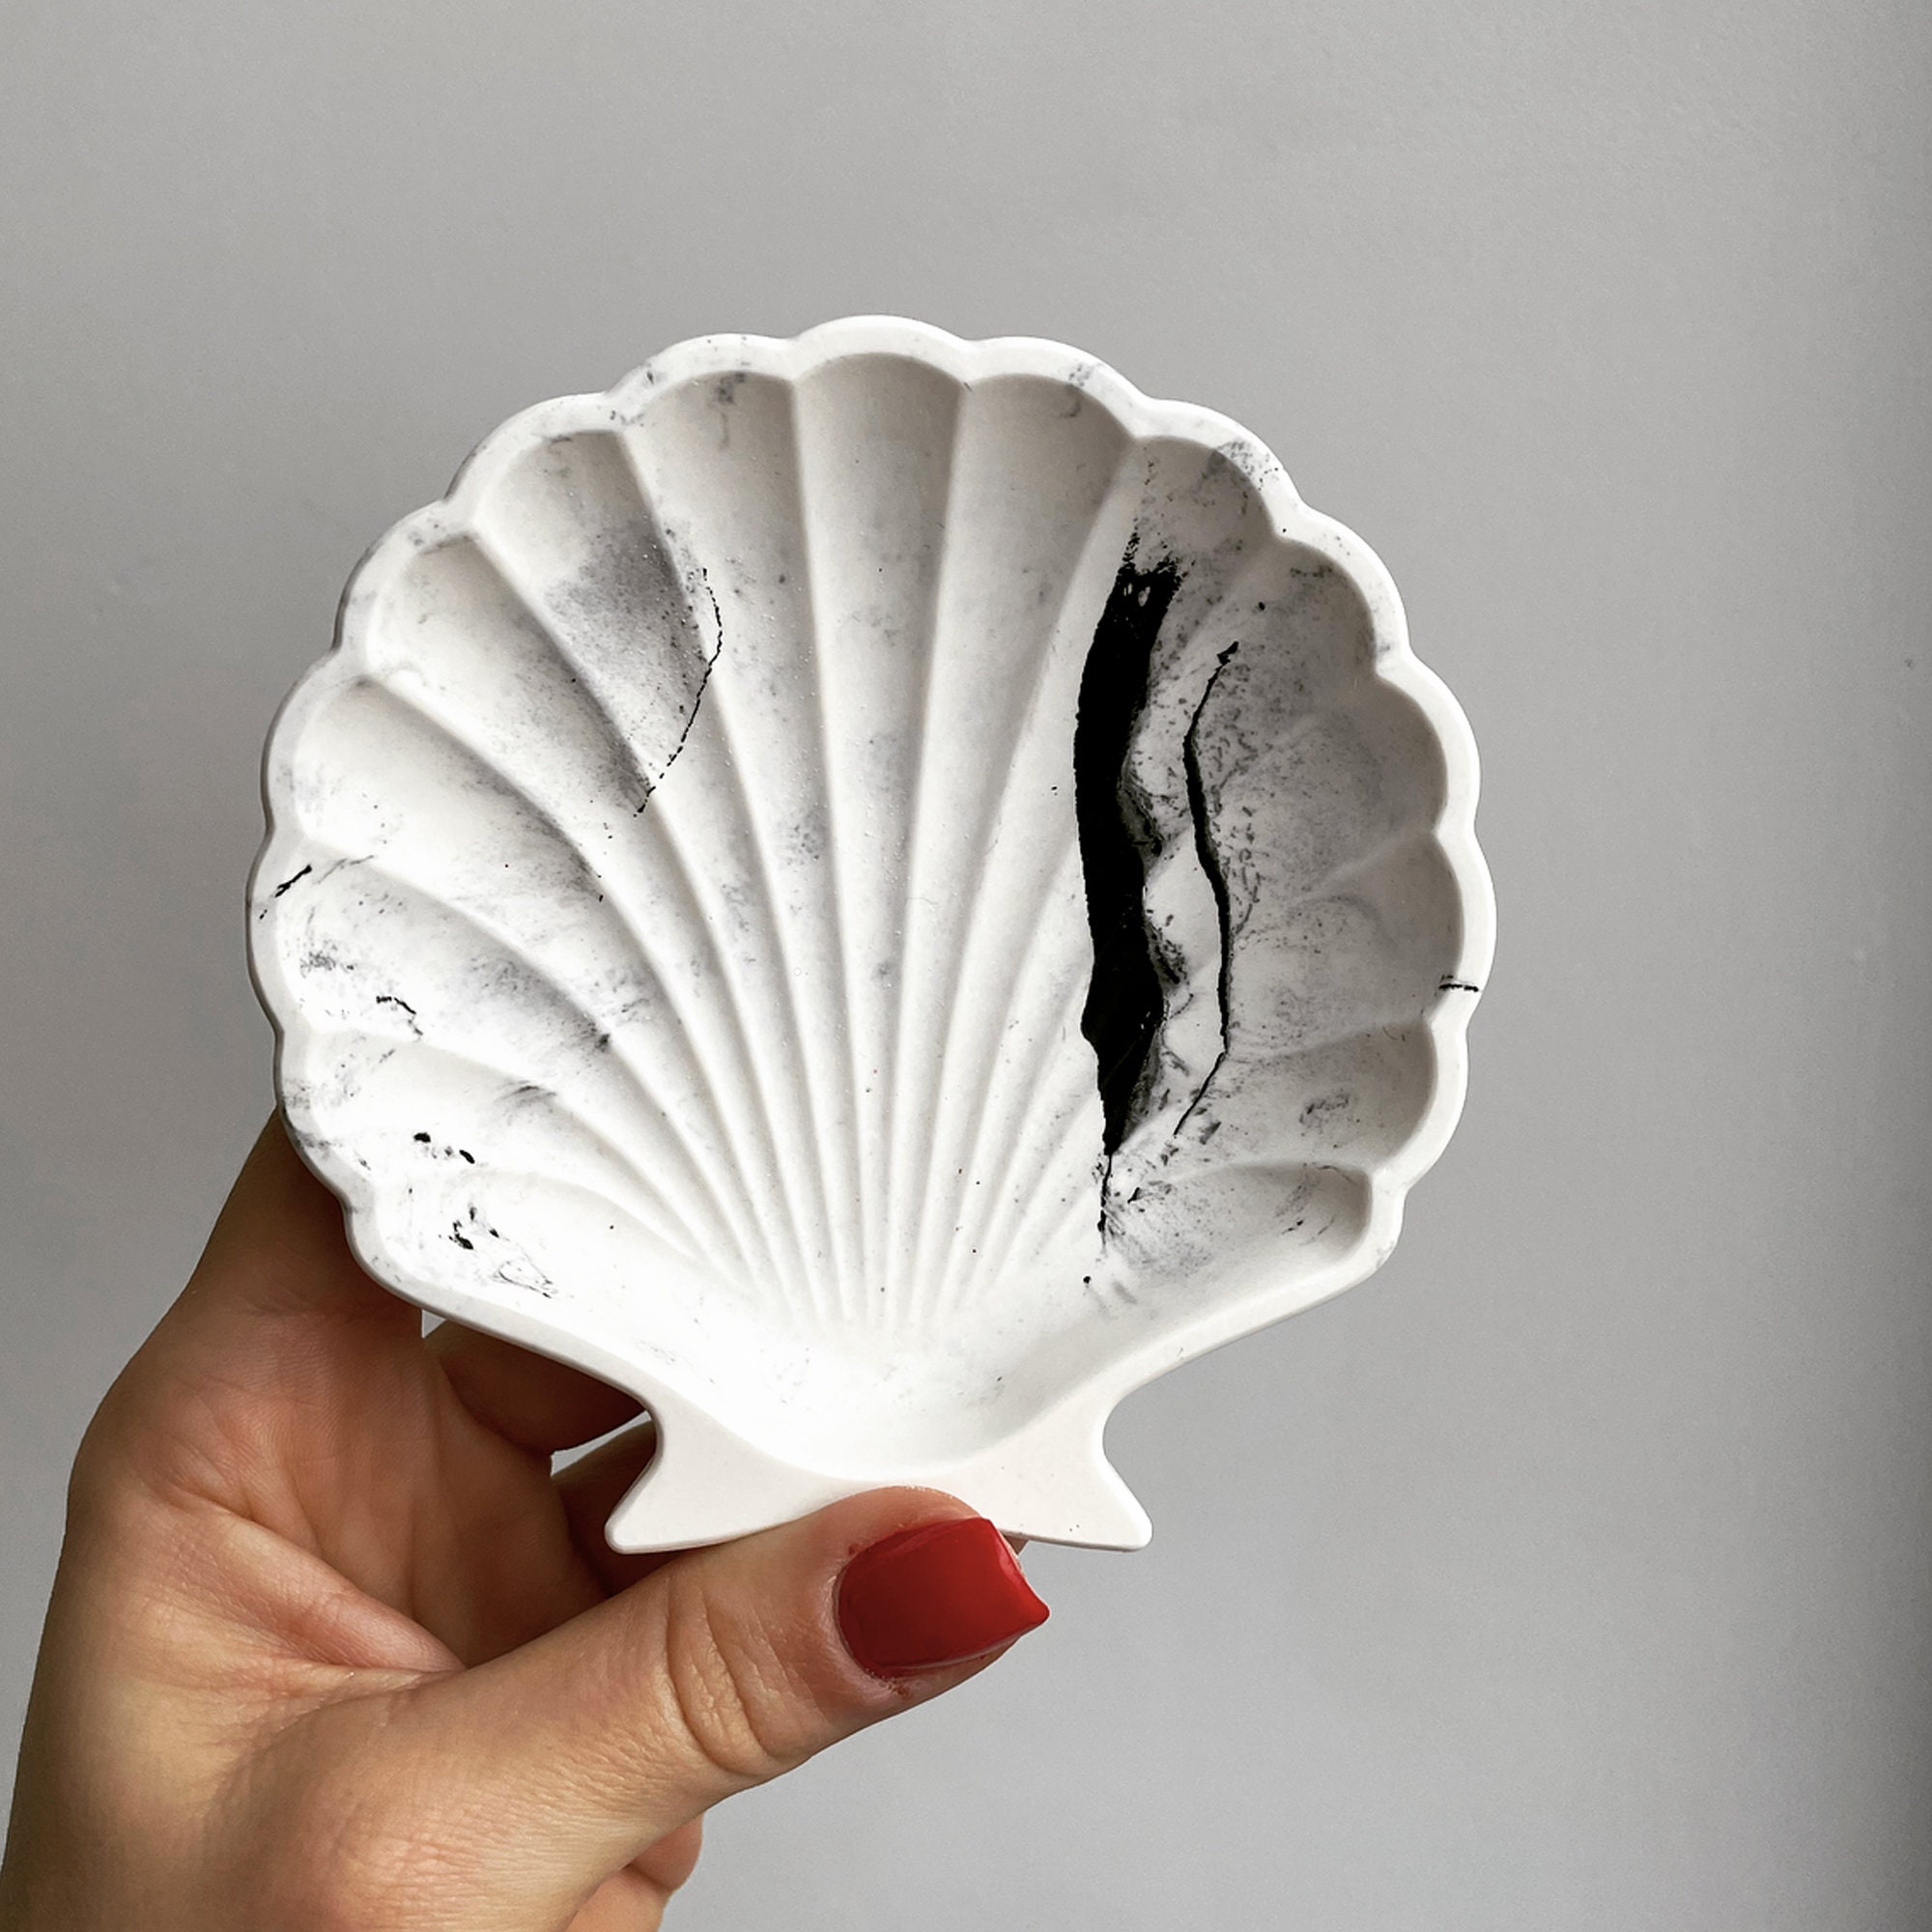 Mini Sea Shell Set, 100 Pieces, Small Shells, Tiny Beach Finds